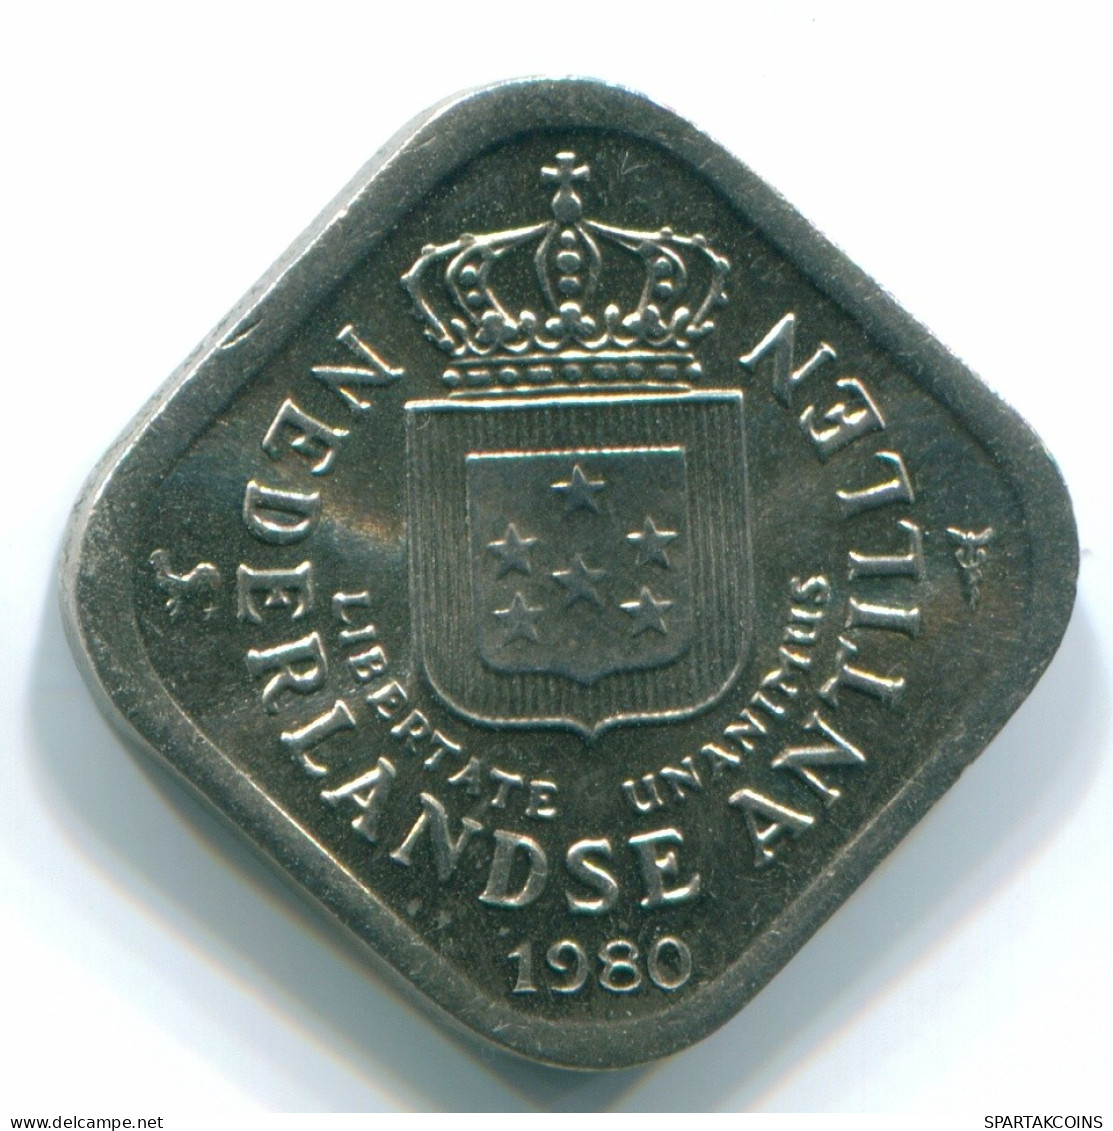 5 CENTS 1980 NETHERLANDS ANTILLES Nickel Colonial Coin #S12311.U.A - Nederlandse Antillen